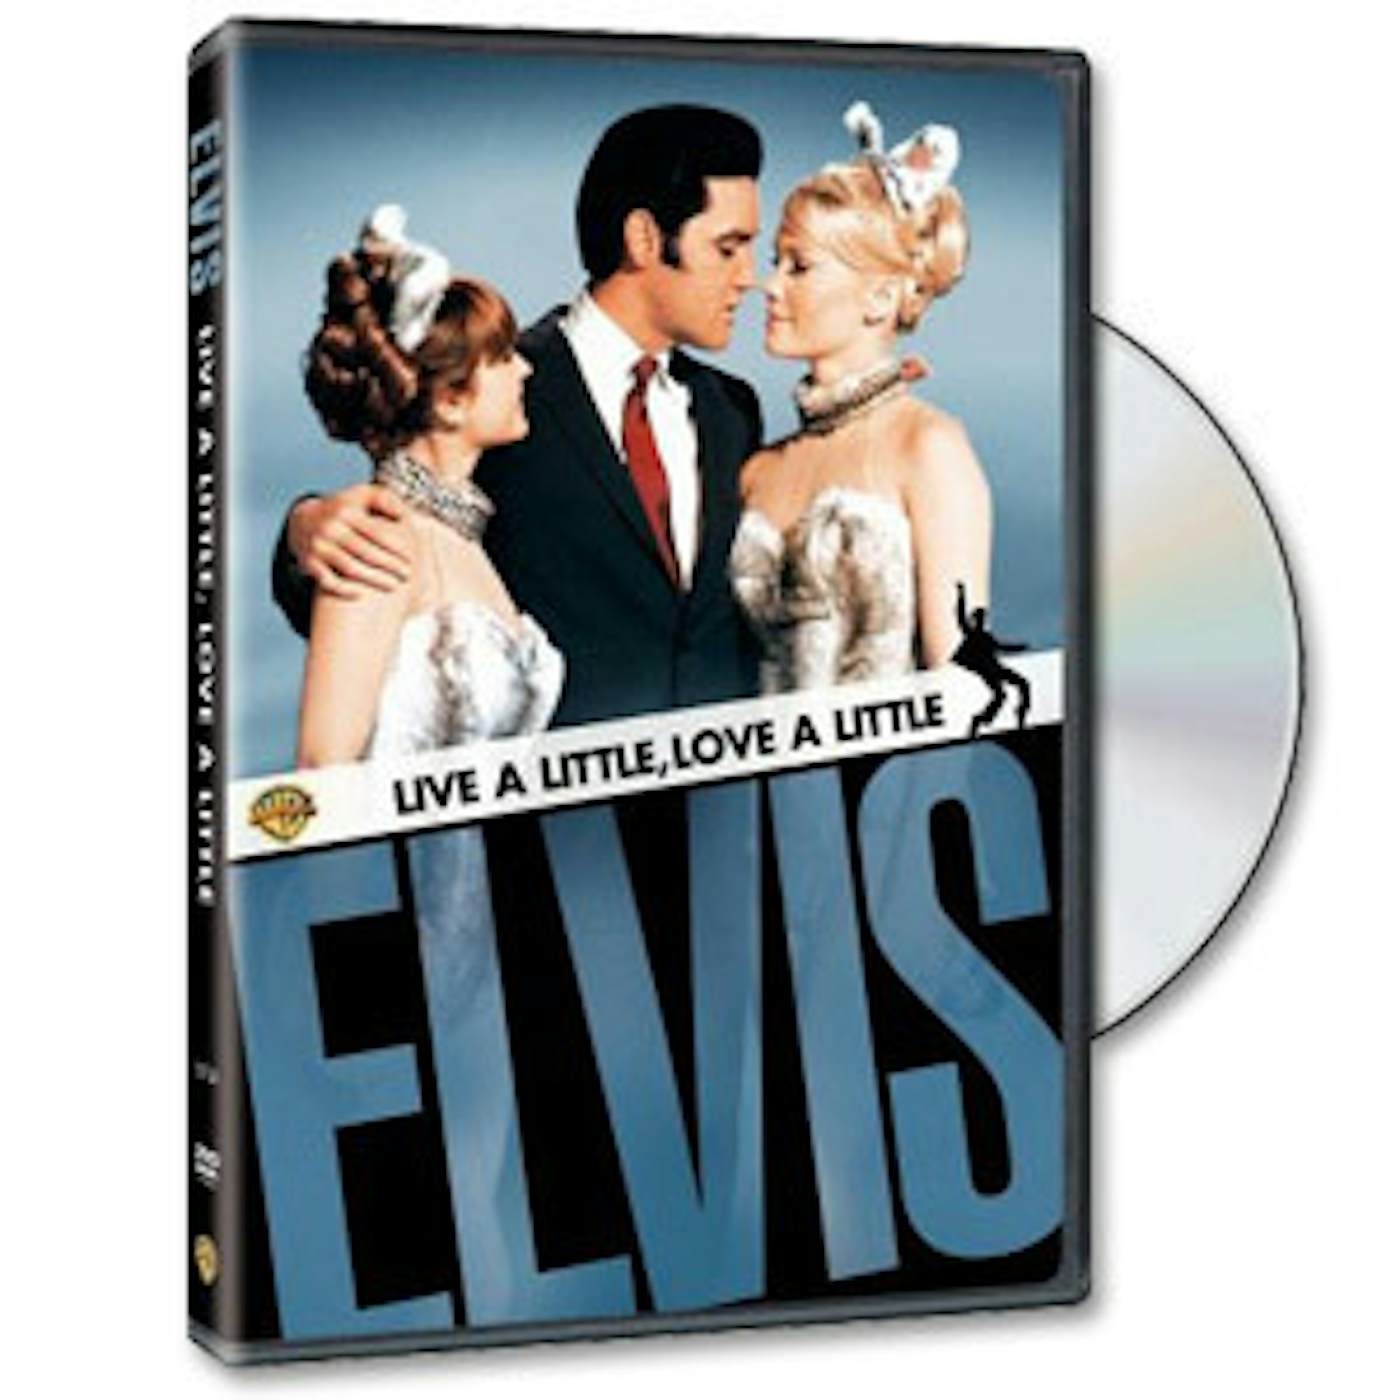 Elvis Presley Live a Little, Love a Little DVD